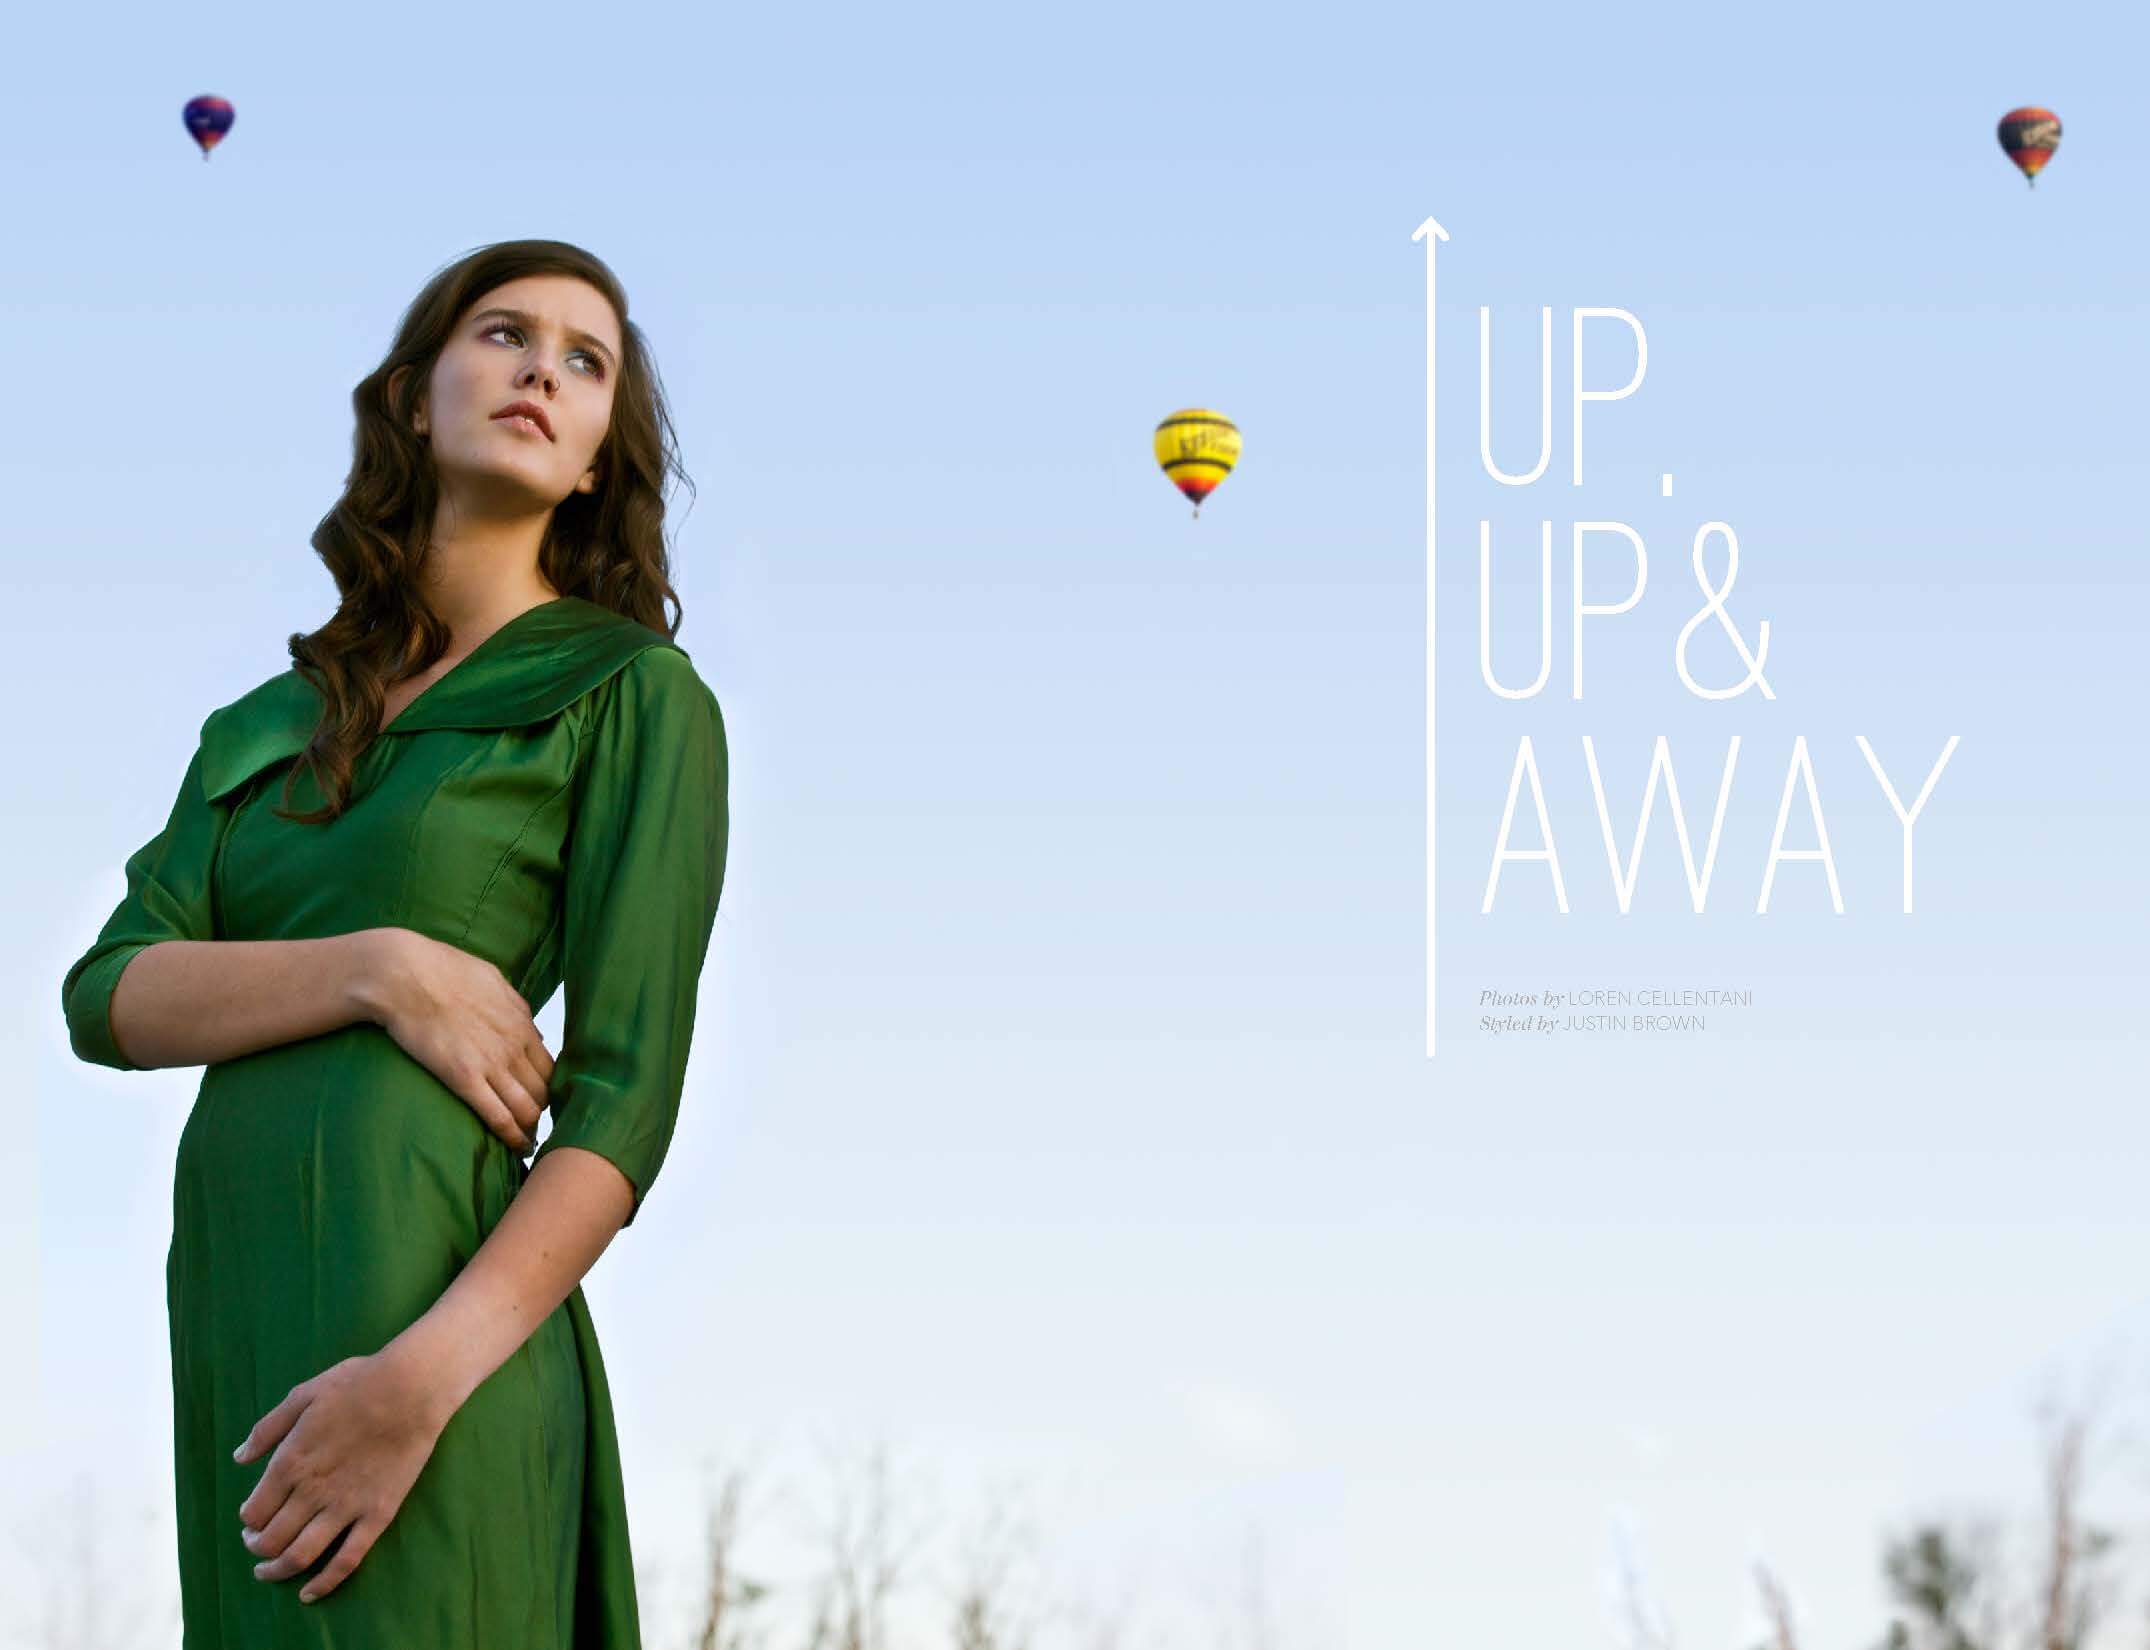 Up, Up & Away by Megan Hillman